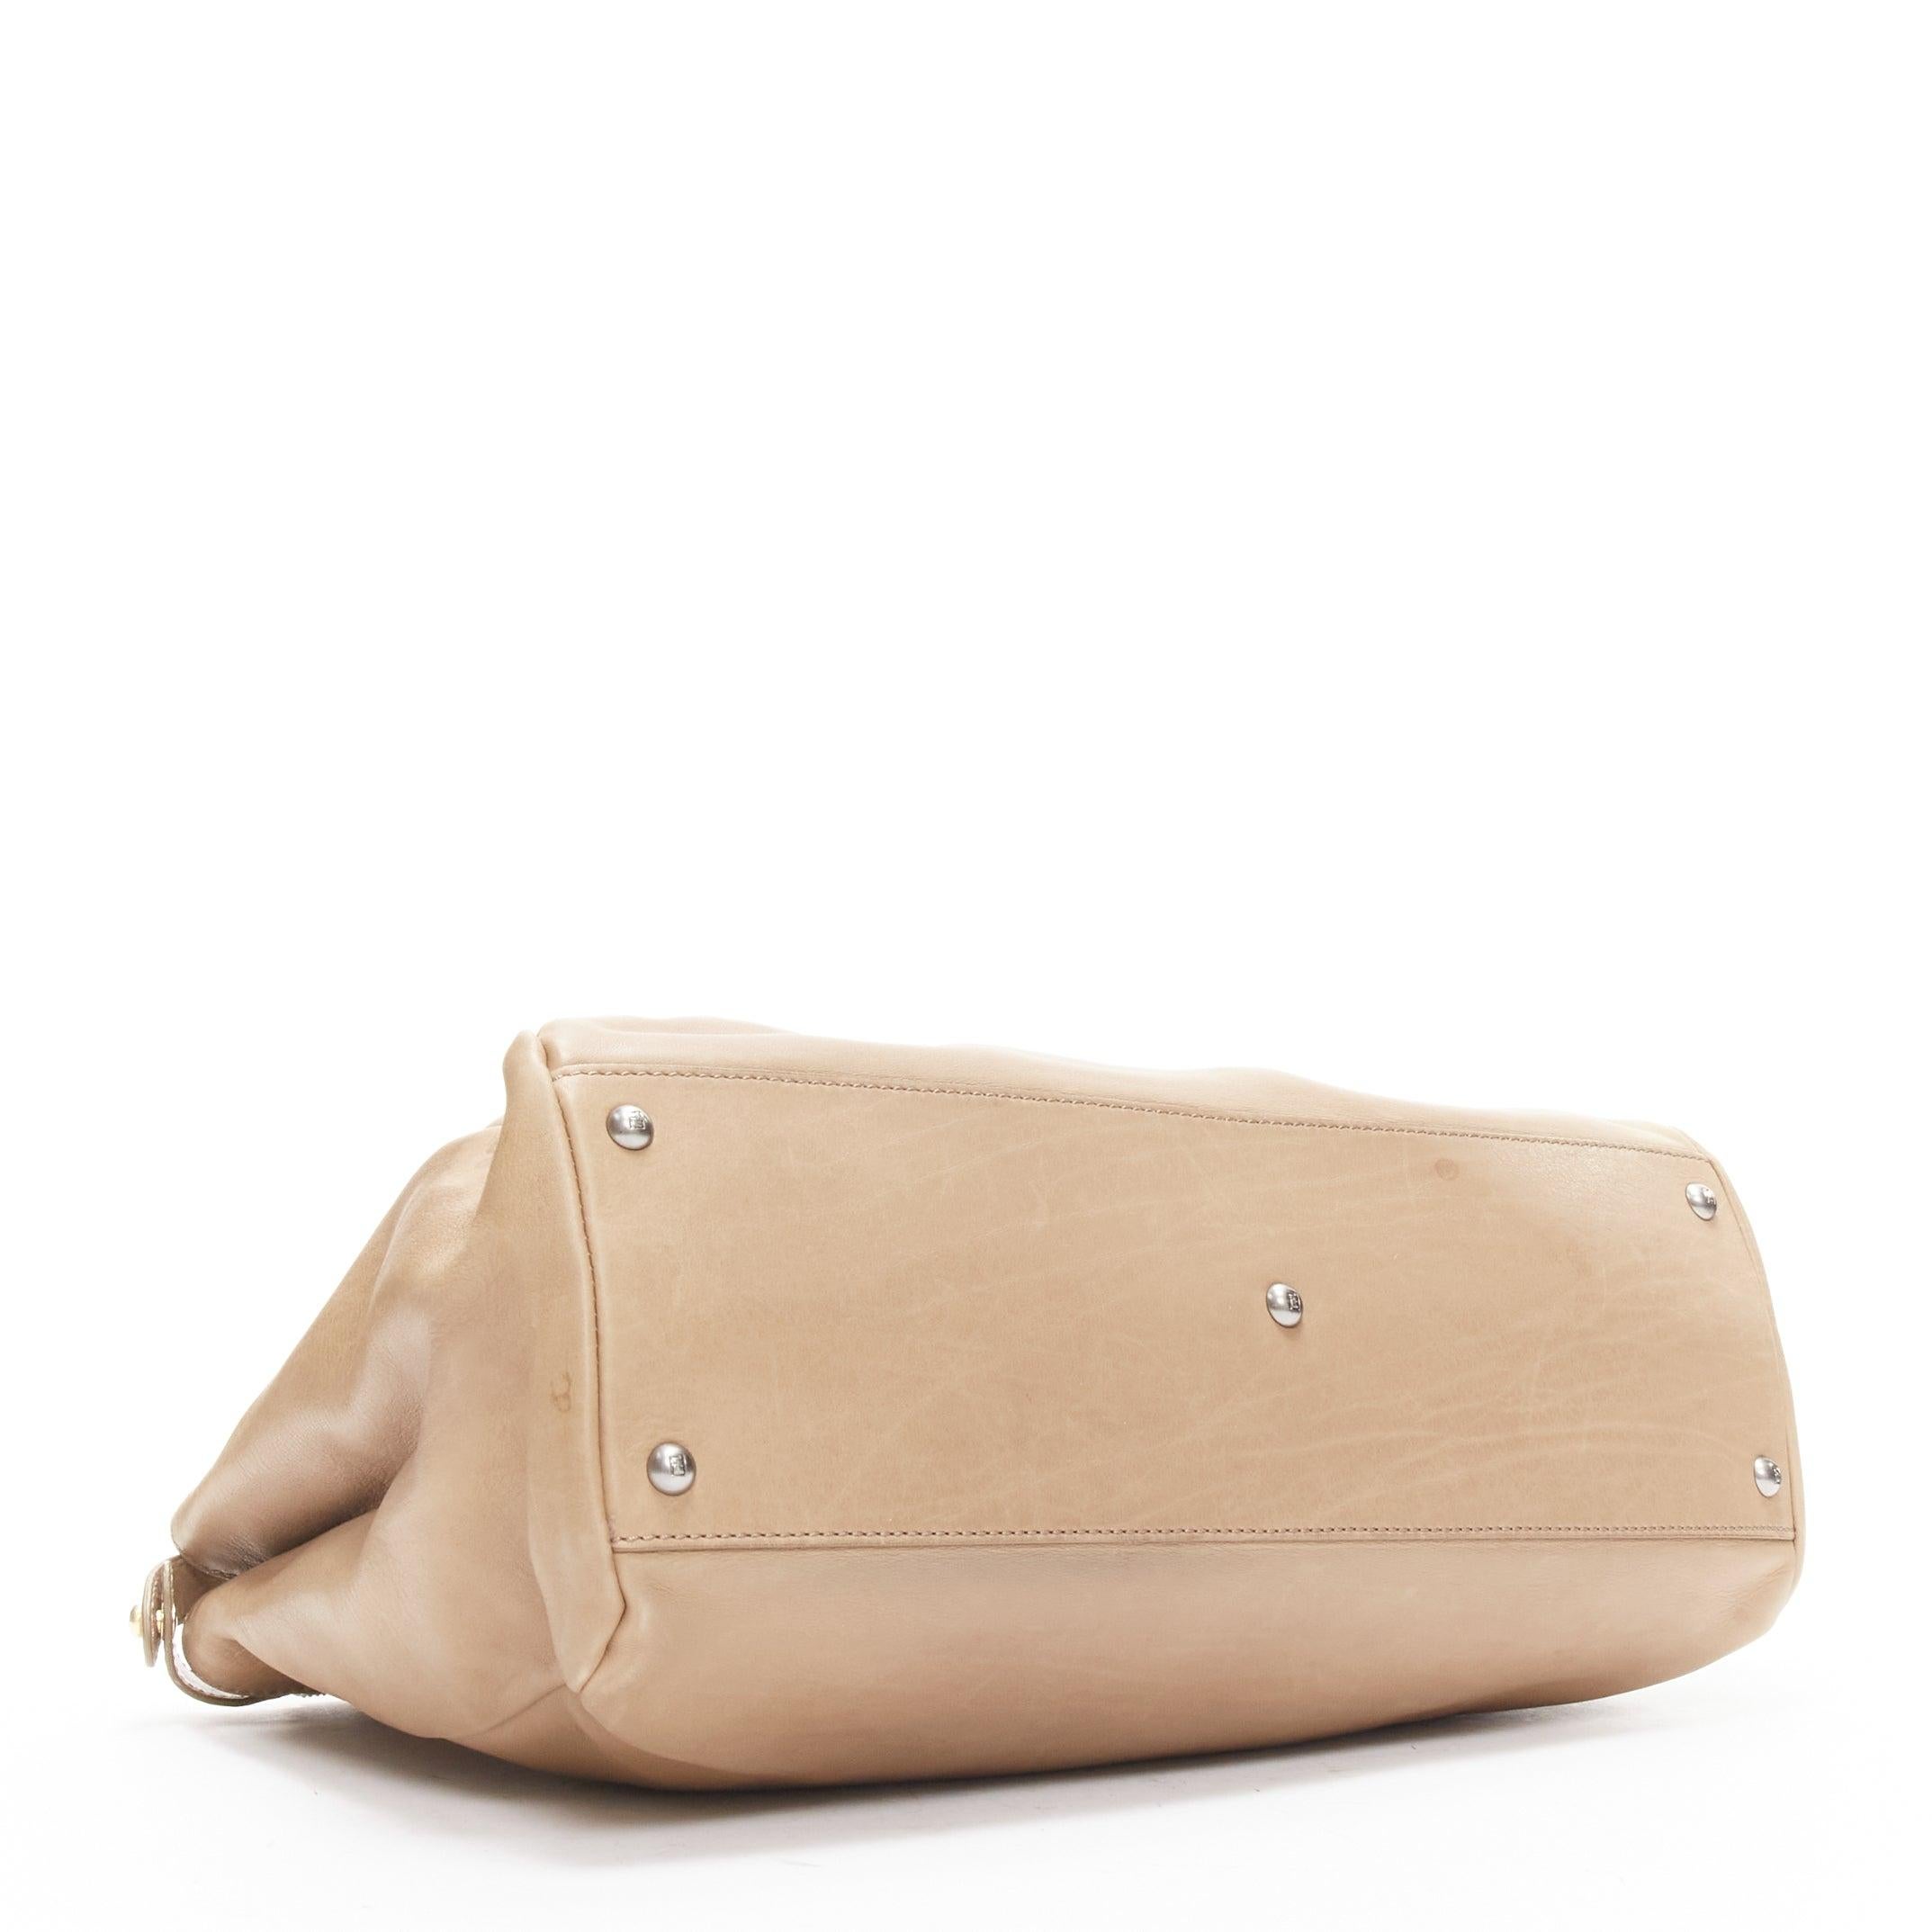 FENDI Peekaboo brown soft leather mixed metal turnlock top handle shoulder bag For Sale 2